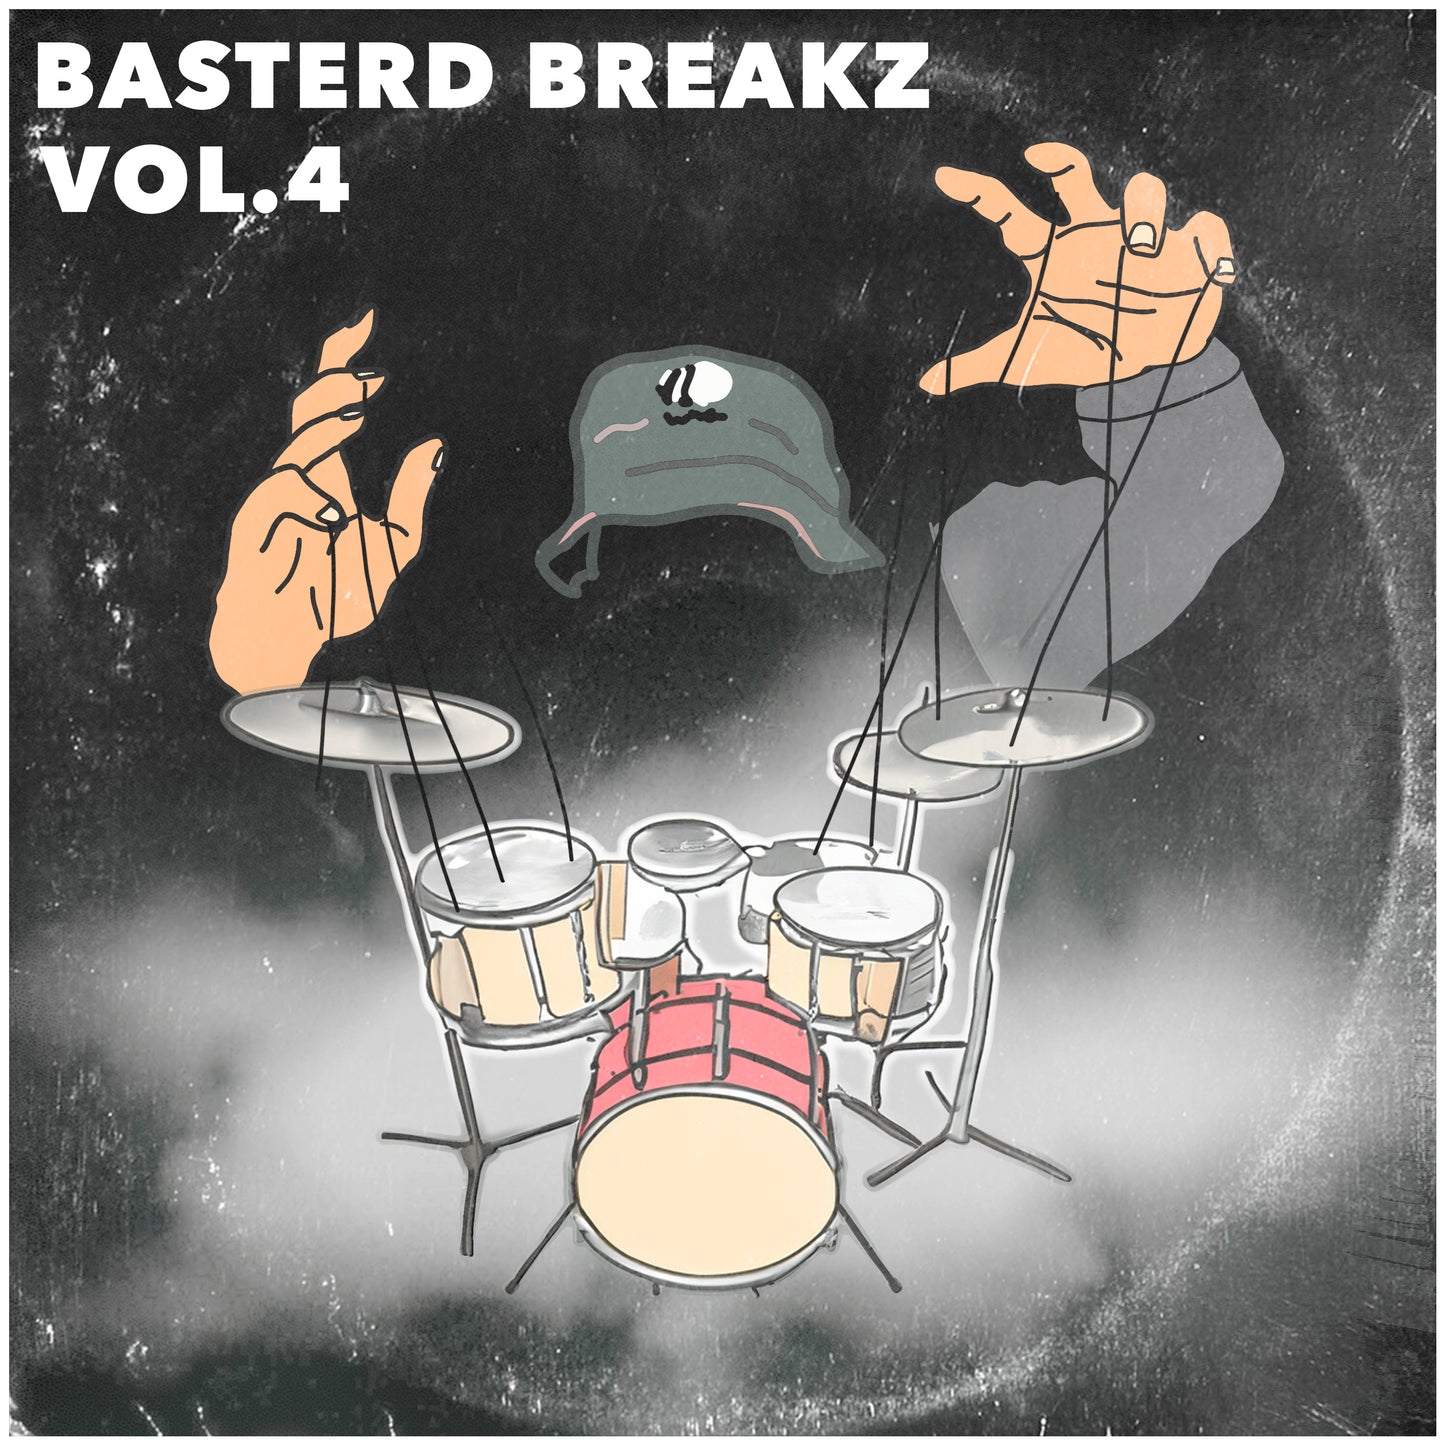 Basterd Breakz Vol. 4